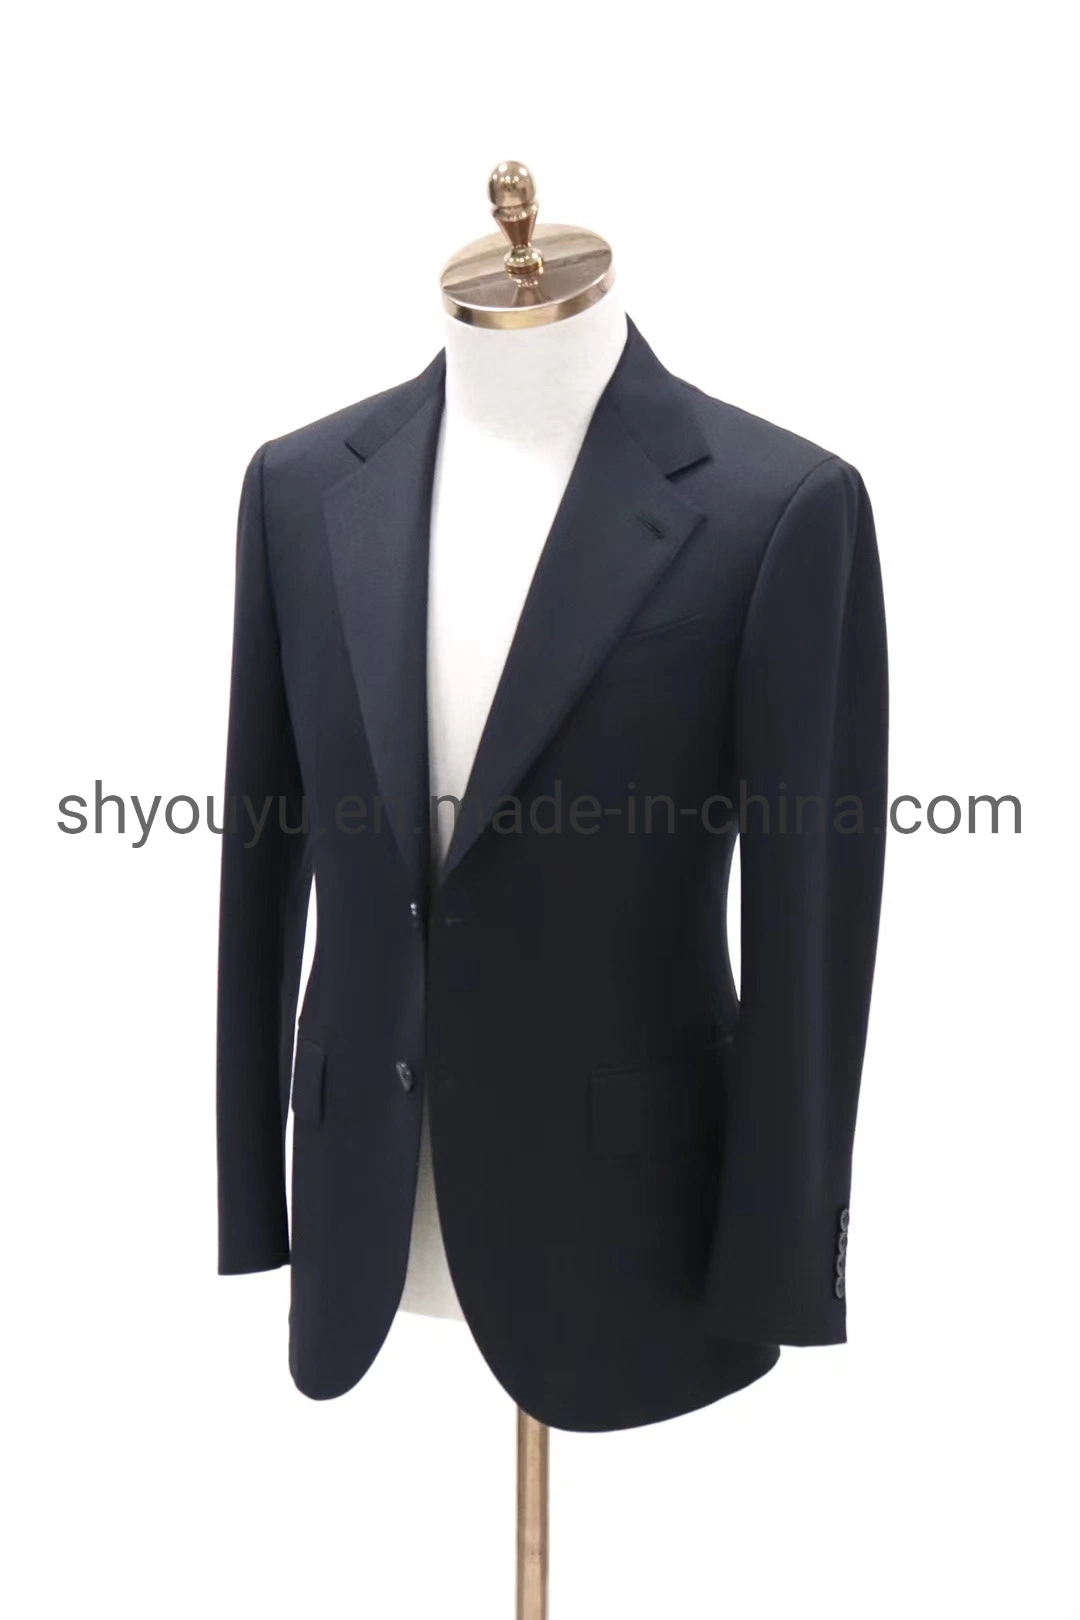 Quality Wedding Suit Tuxedo Suit Custom Clothing Apparel